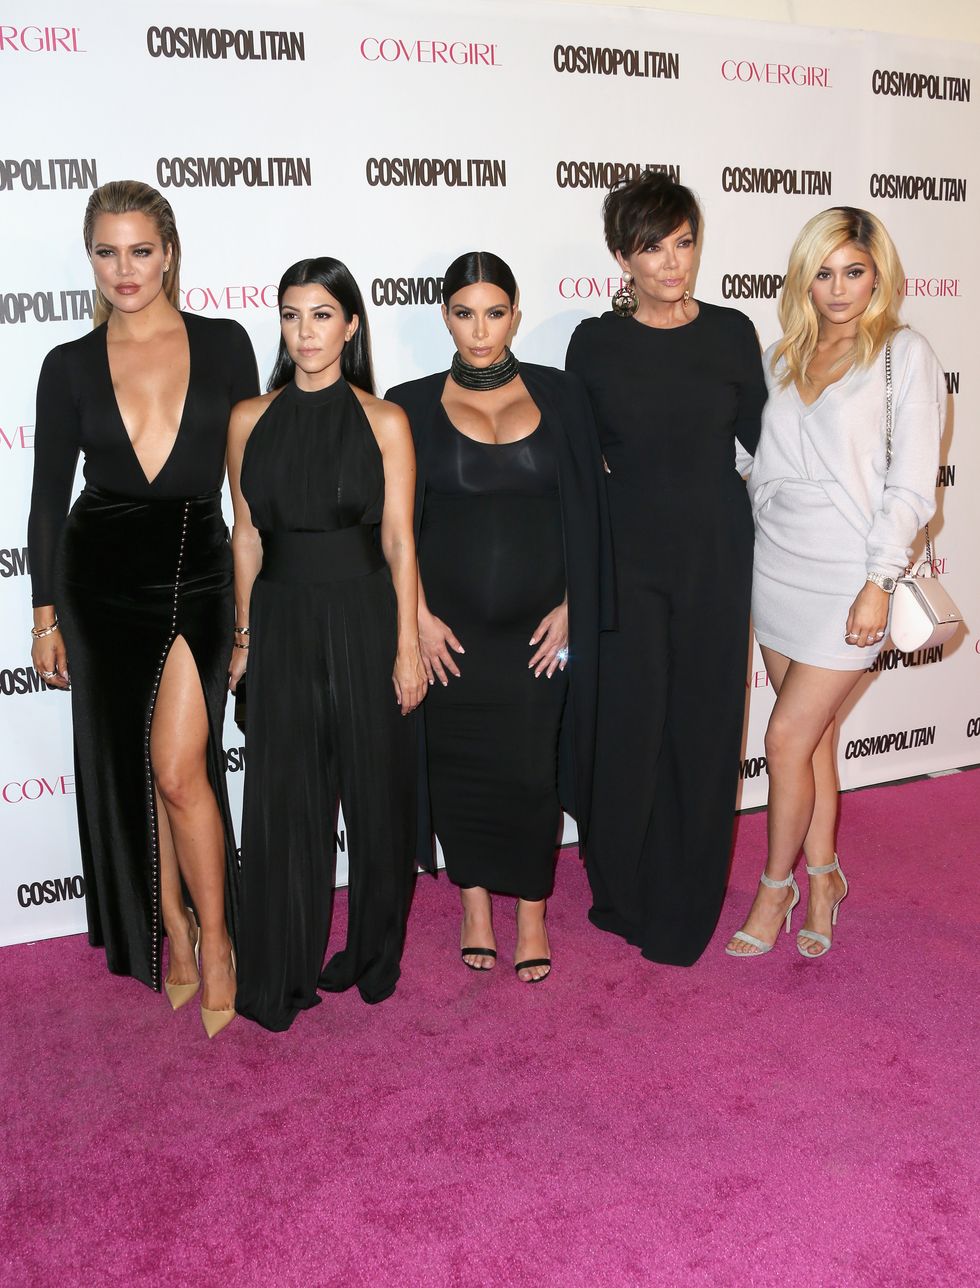 Khloe, Kourtney and Kim Kardashian with Kris and Kylie Jenner at Cosmopolitan's 50th birthday